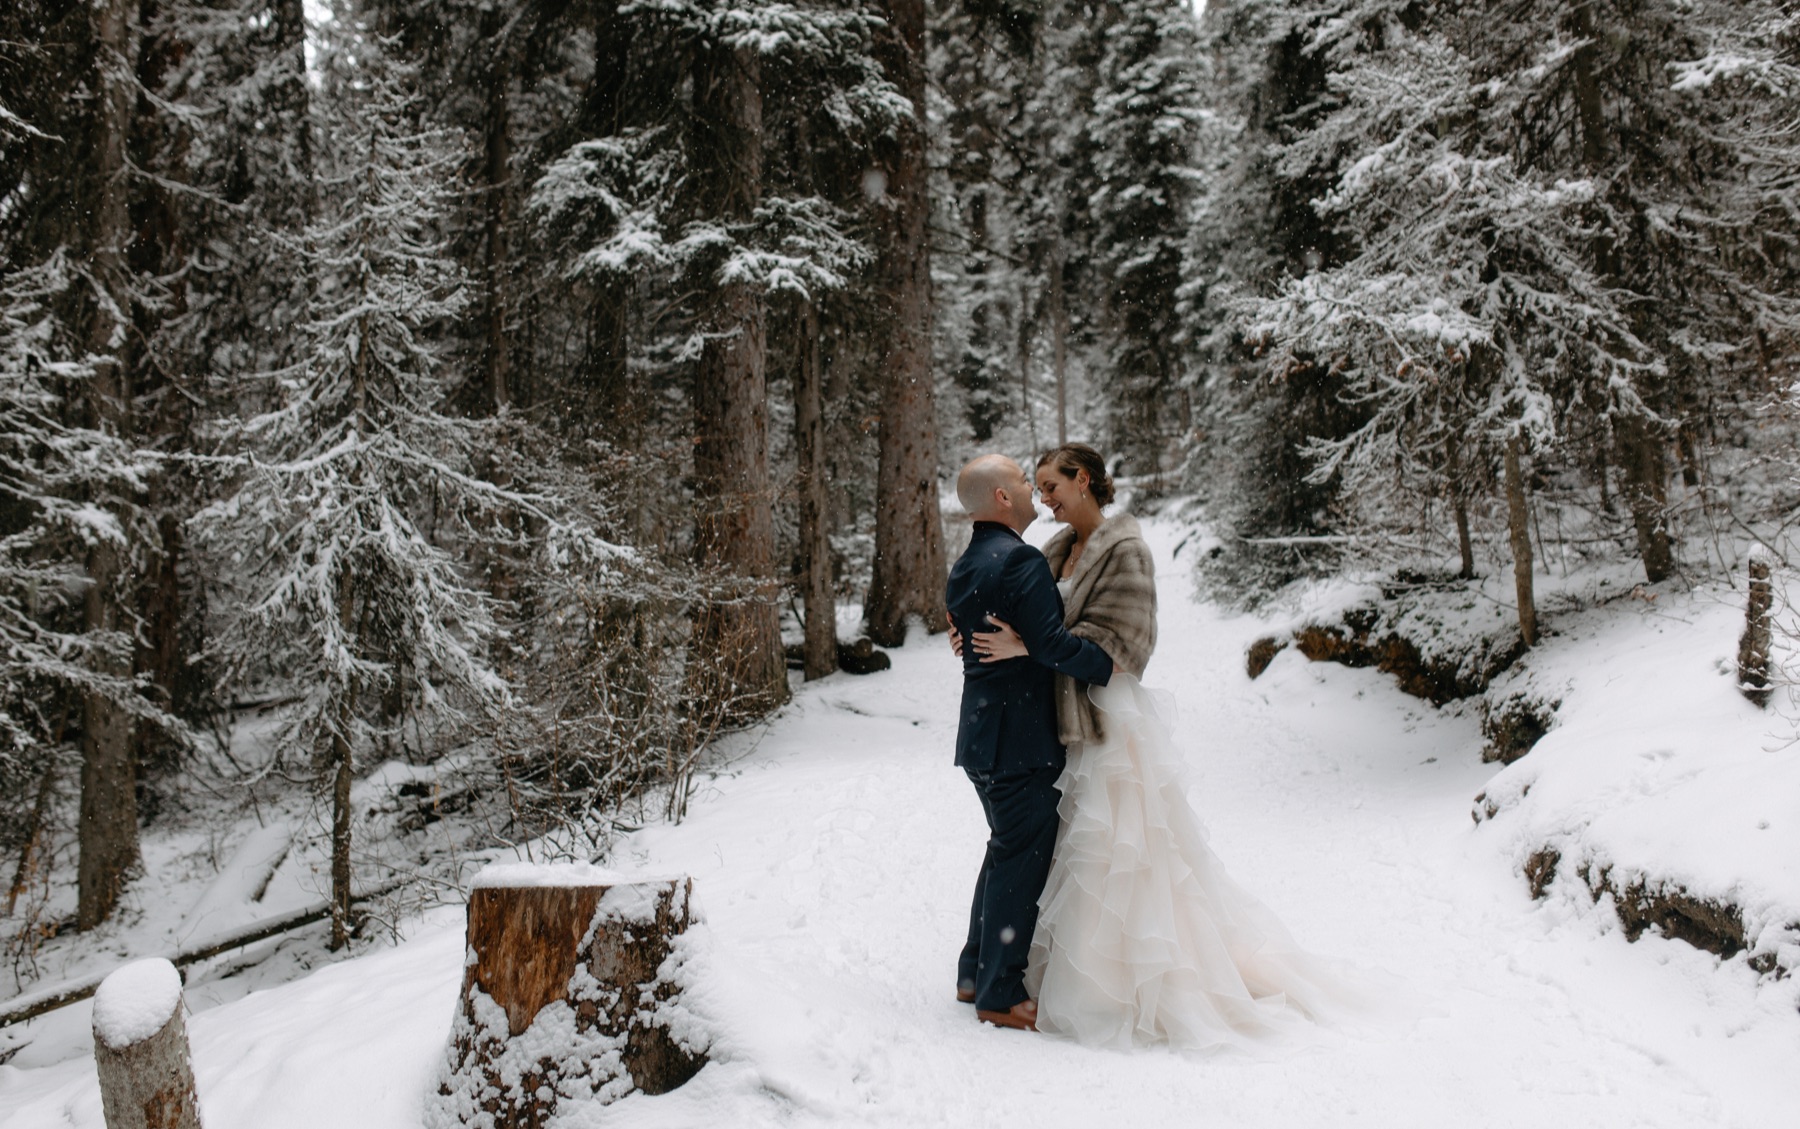 Forest winter wedding portraits in Banff National Park